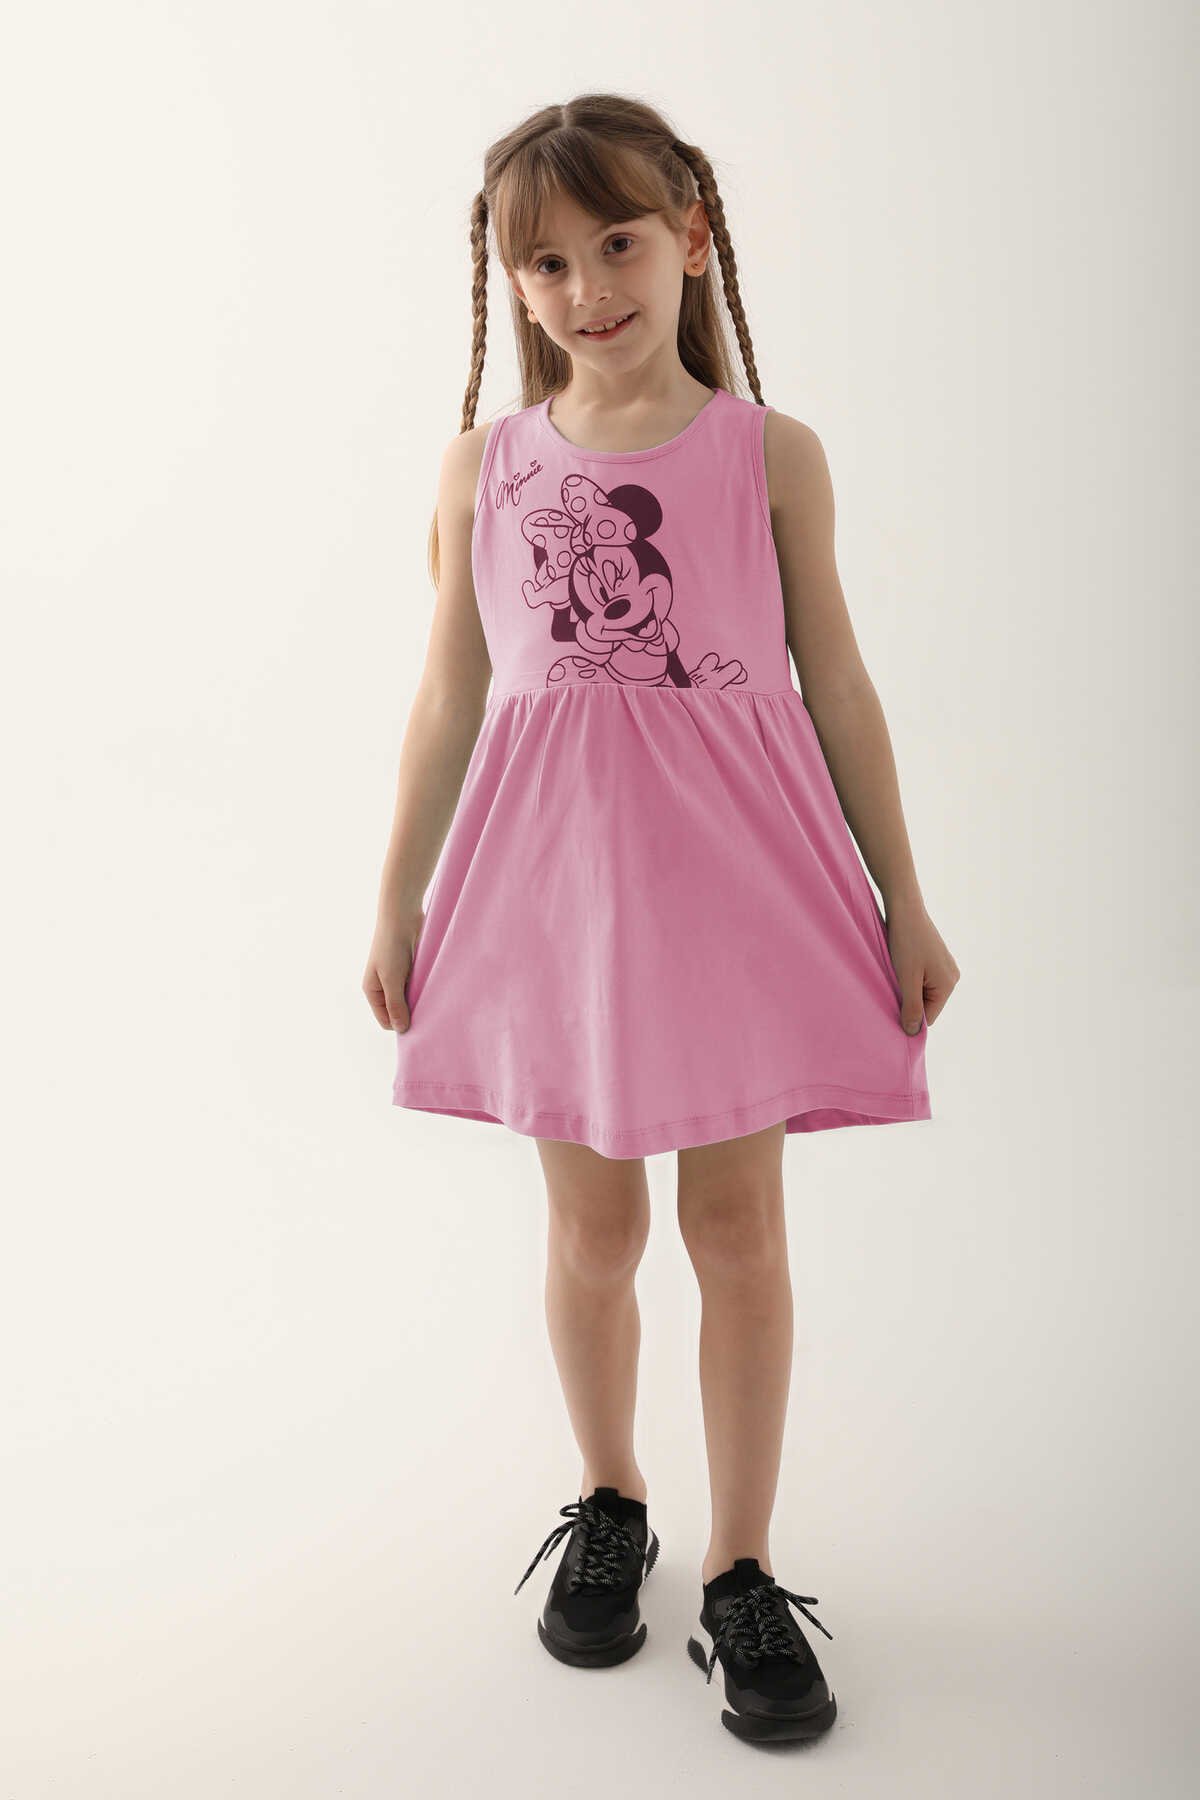 Minnie Mouse - Minnie Mouse D4860-3 Kız Çocuk Elbise Şeker Pembe